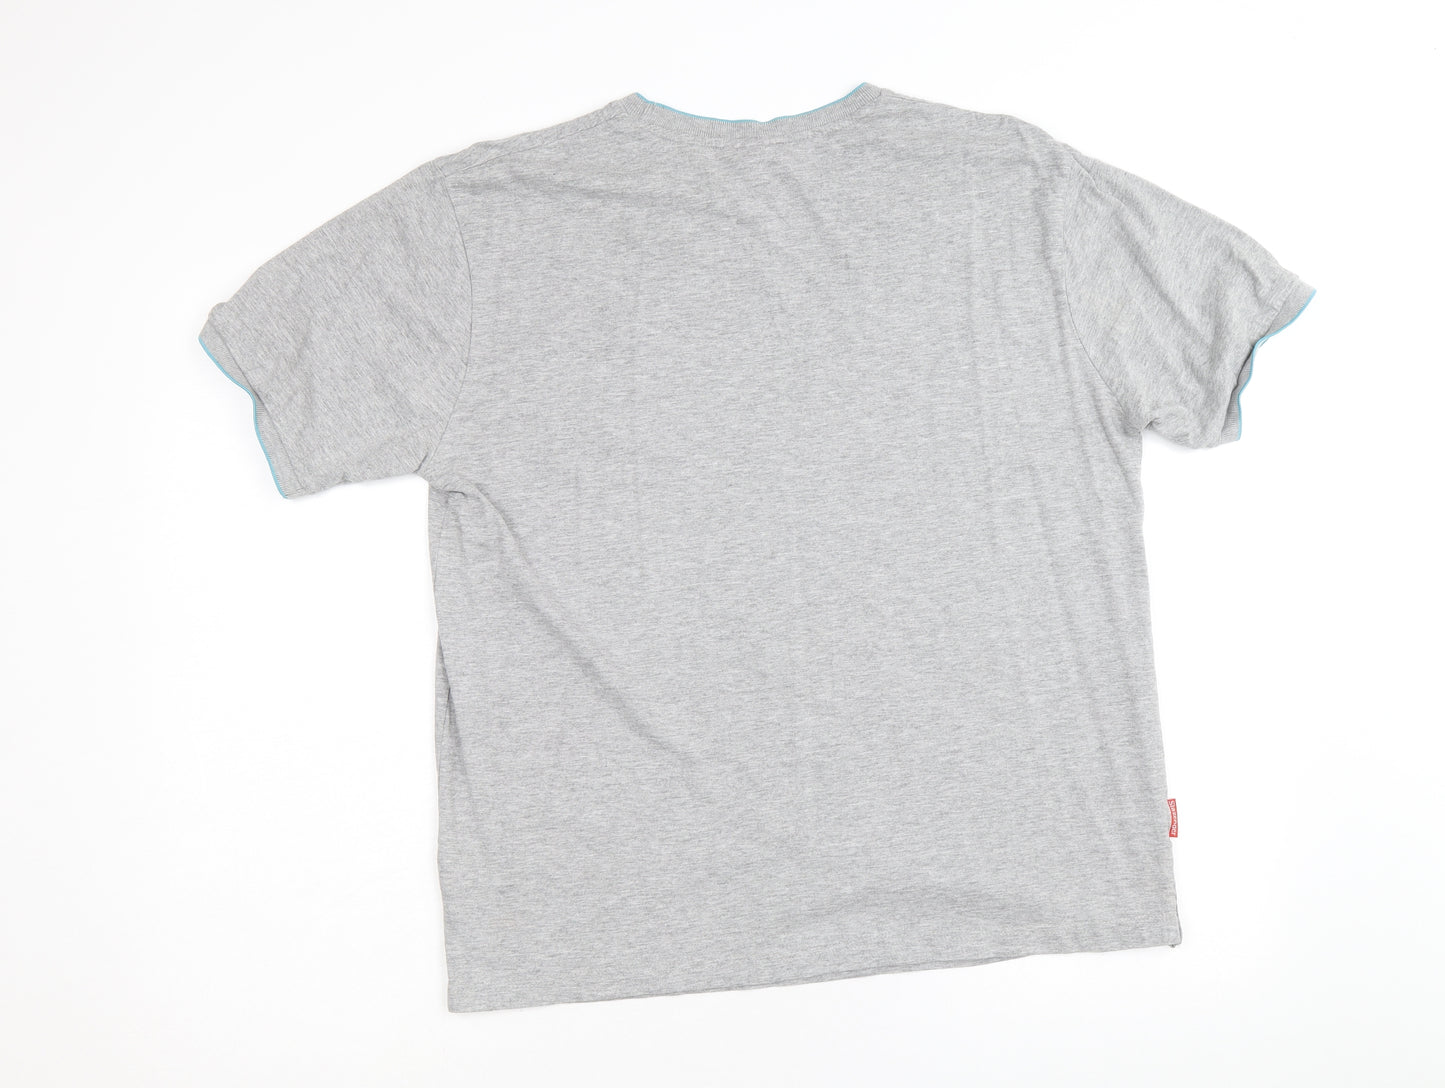 Slazenger Mens Grey Cotton T-Shirt Size L Round Neck